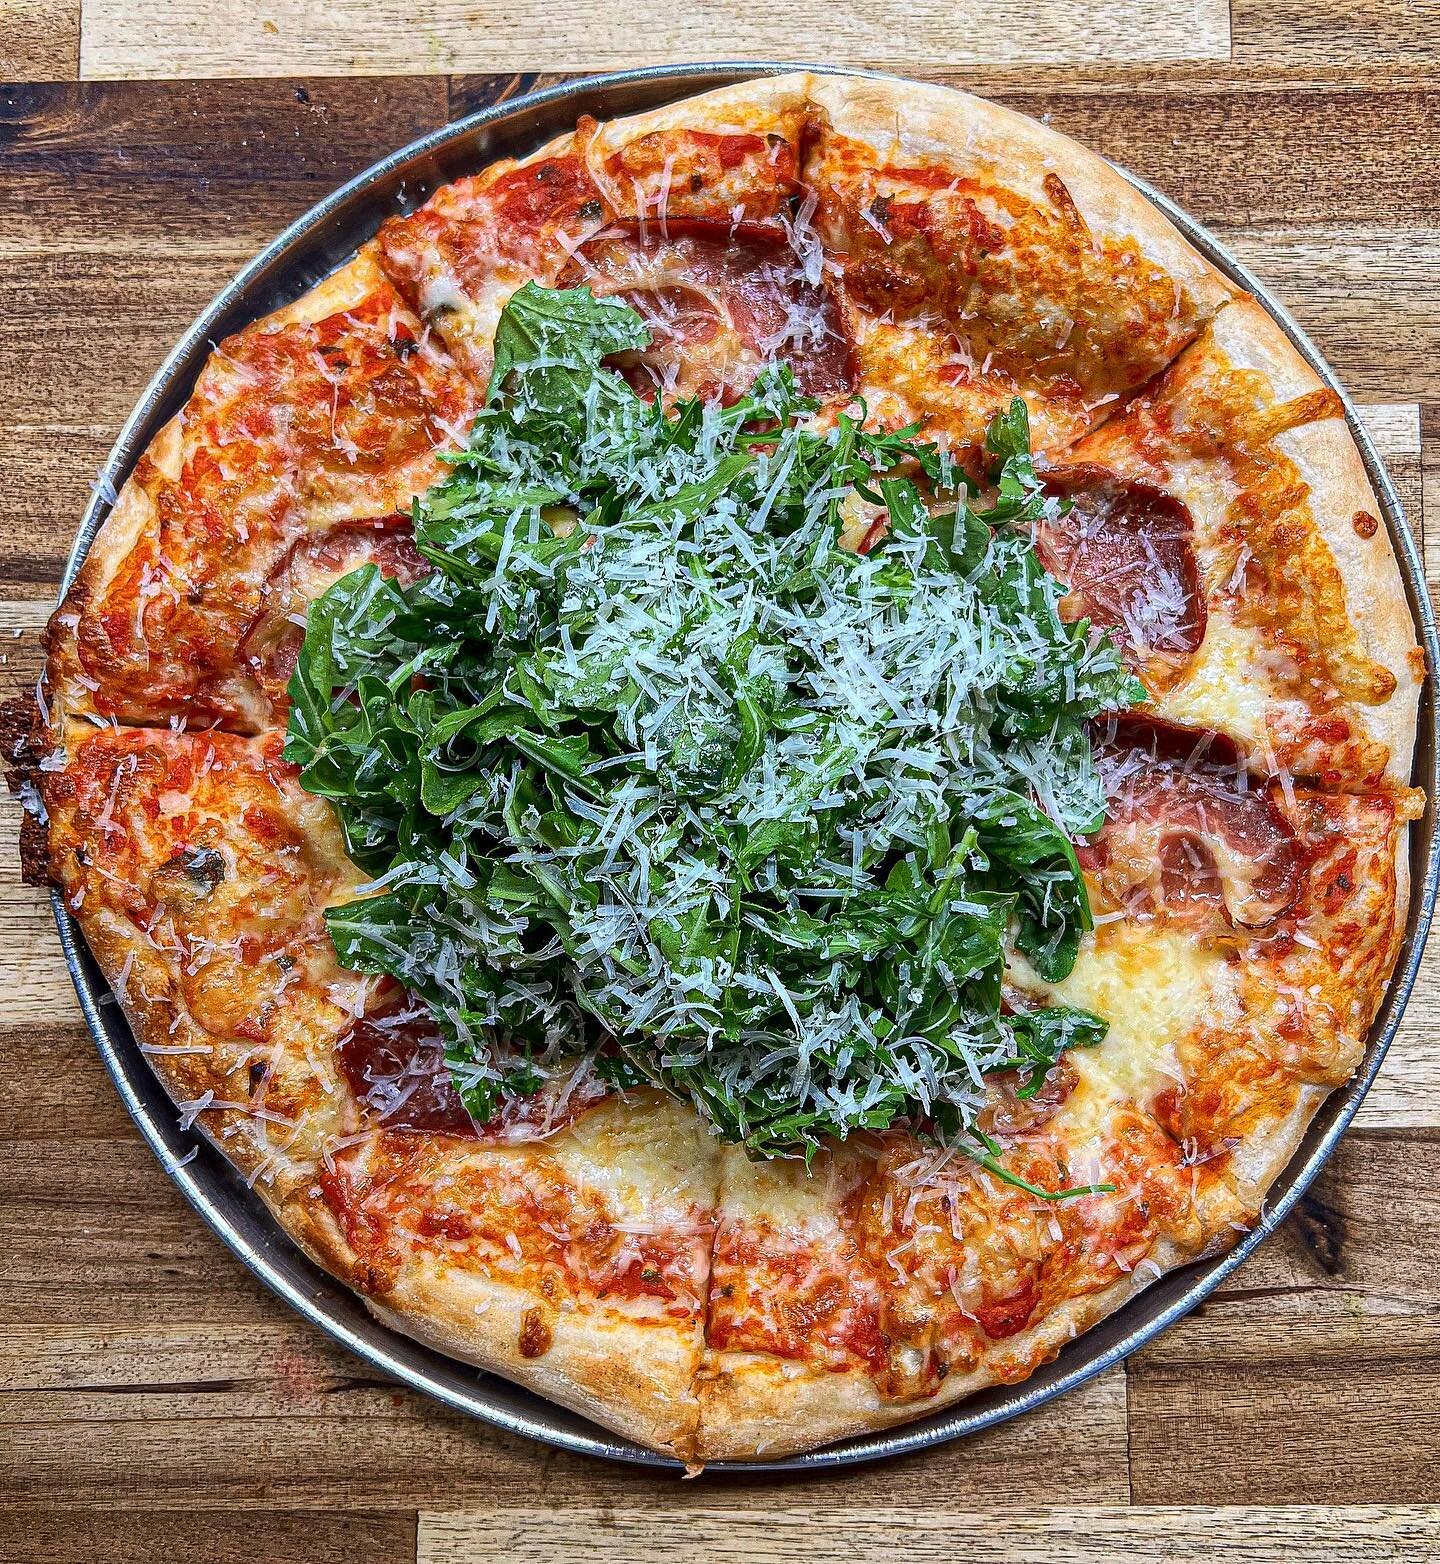 one of our favorites, the coppa! 

#dogandbeartavern #tahoma #california #smallplates #pizza #warm #cozy #tavern #beer #wine #december #2022 #food #charcuterieboard #tahoe #laketahoe #pizzalover #eeeeeats #tahoeeats #tahoefood #happyhour #pizza #deli